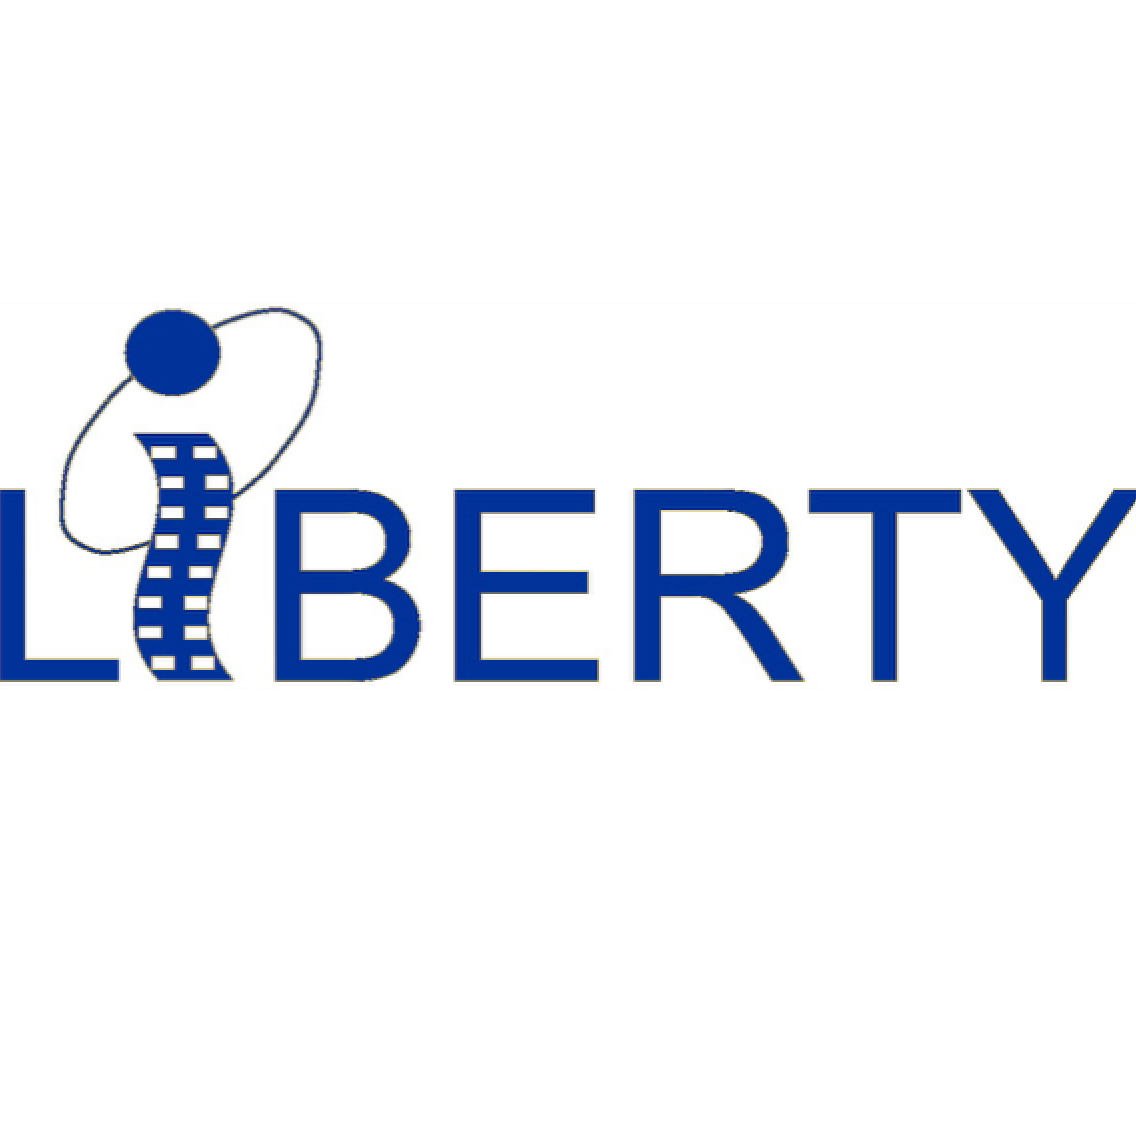 Liberty Cinema|Movie Theater|Entertainment